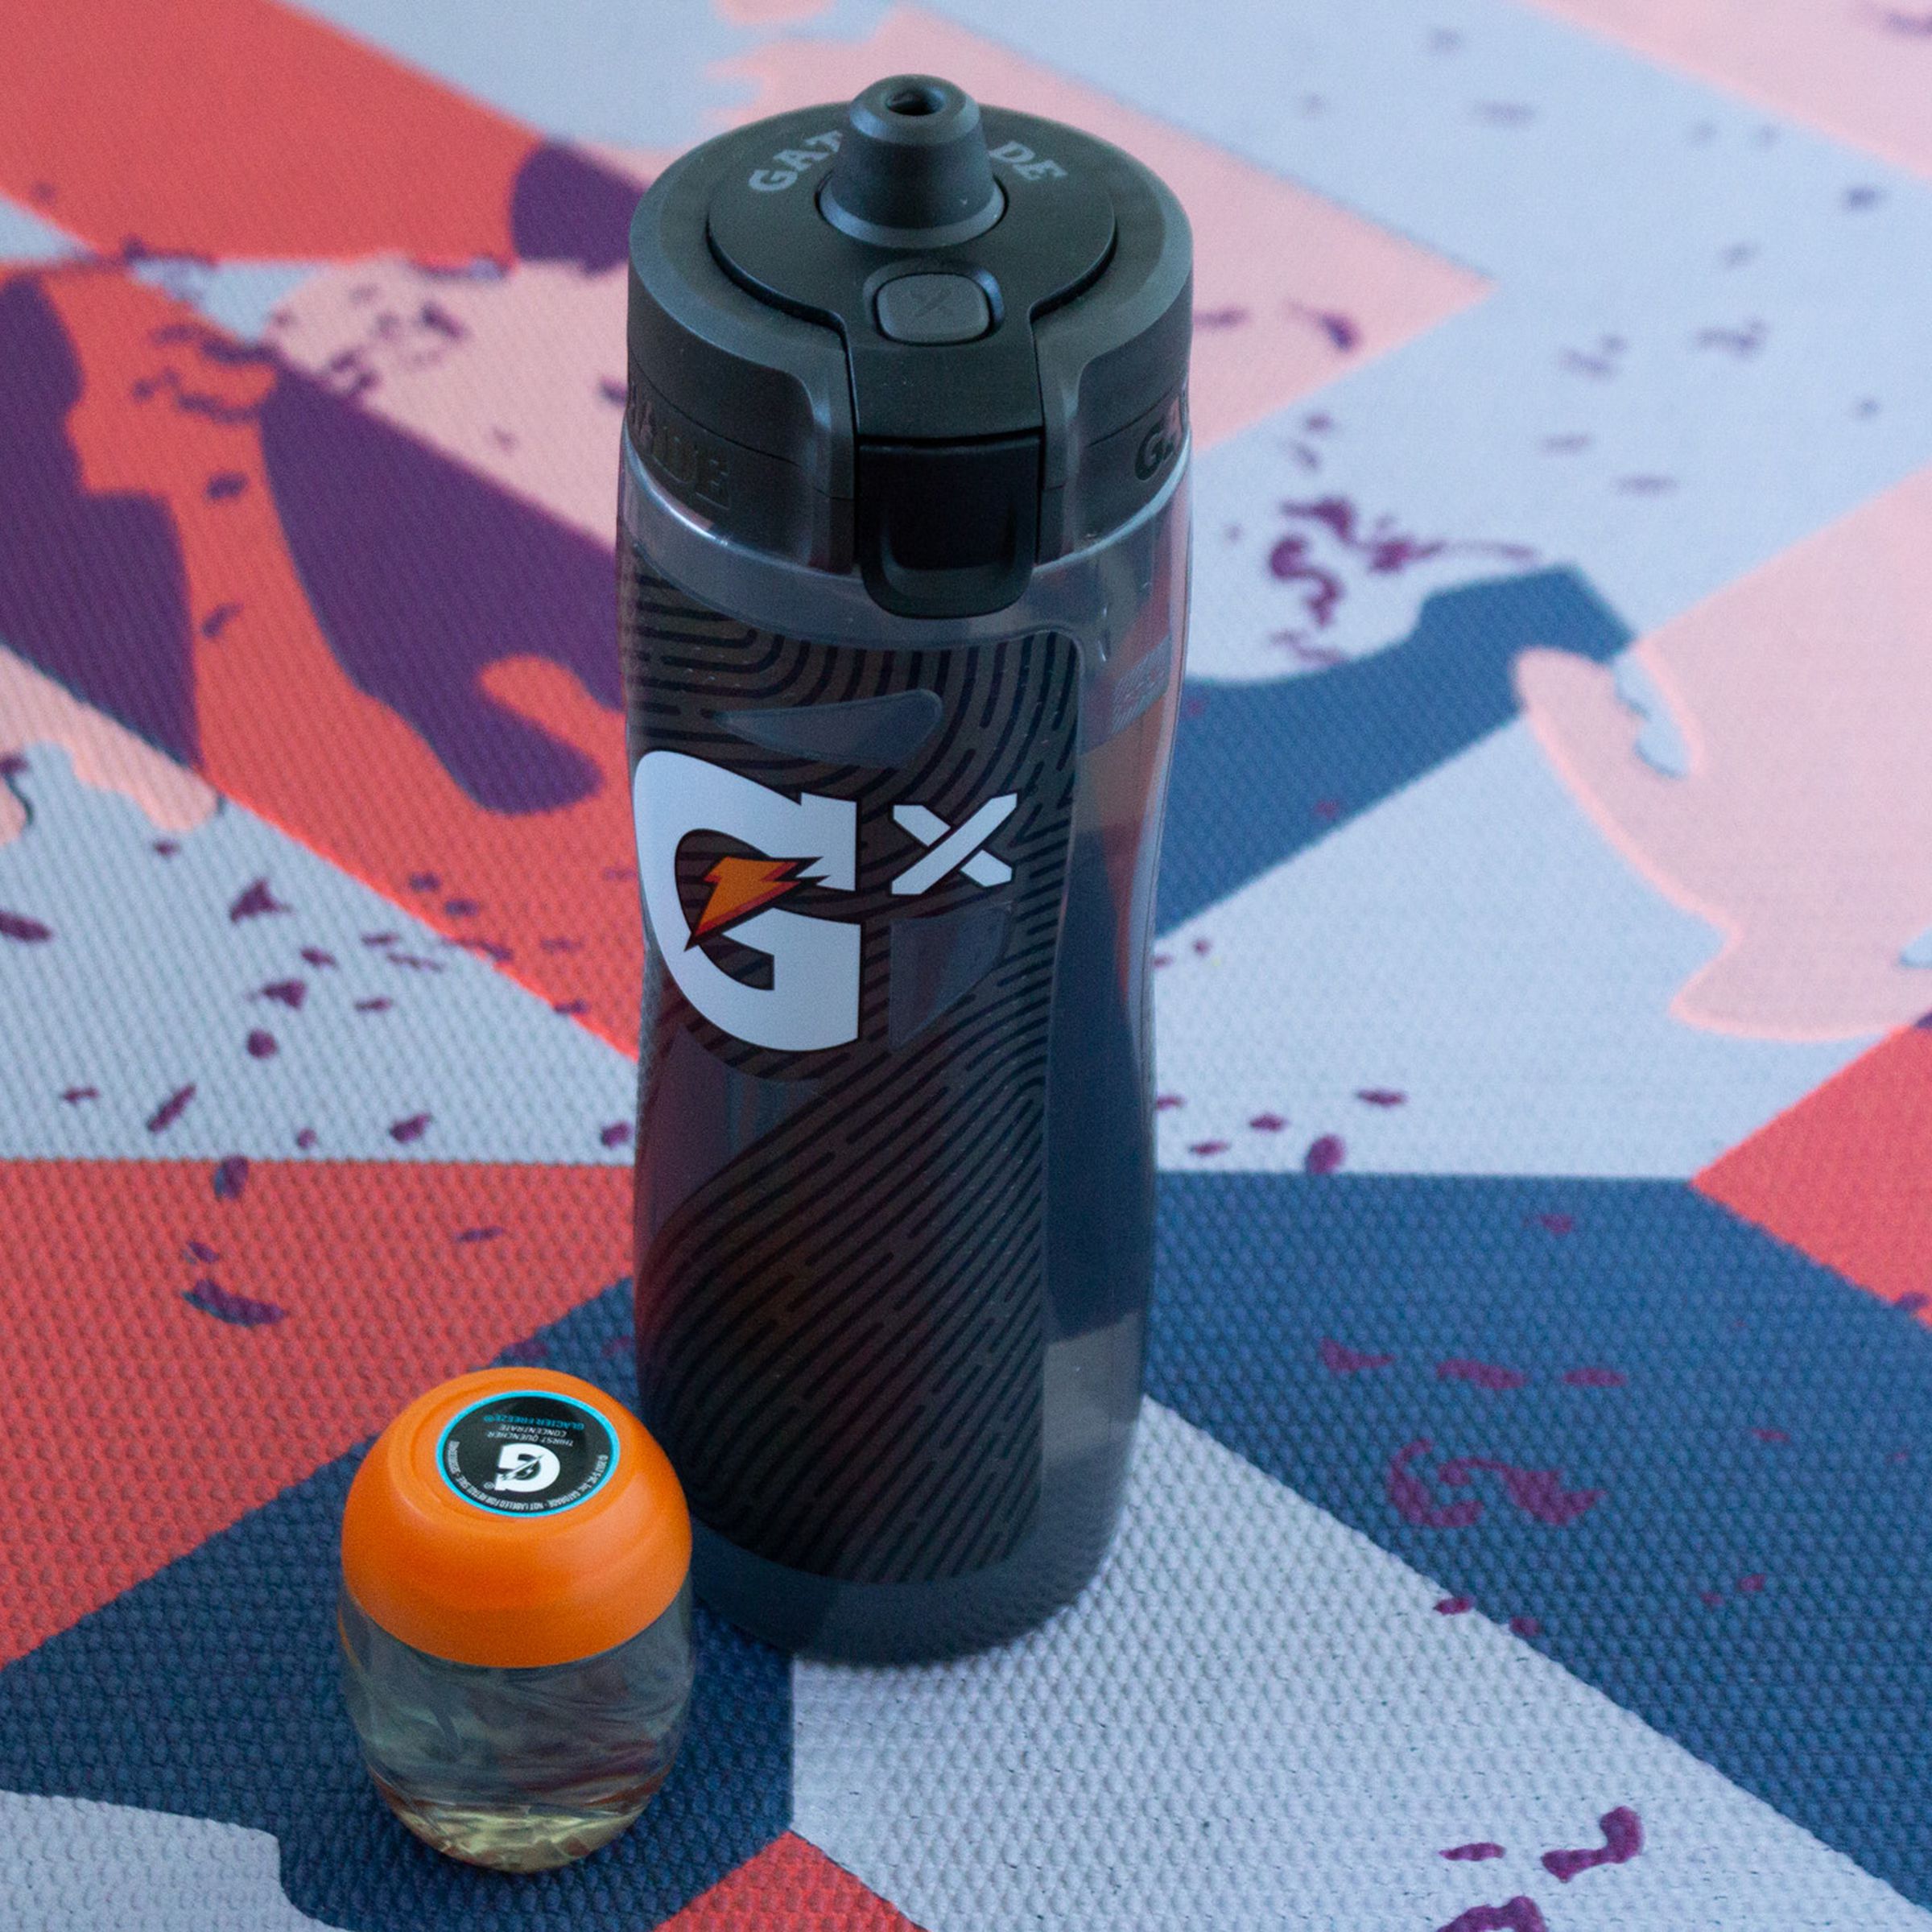 Gatorade Smart Gx bottle on a yoga mat with a Gx pod next to it.